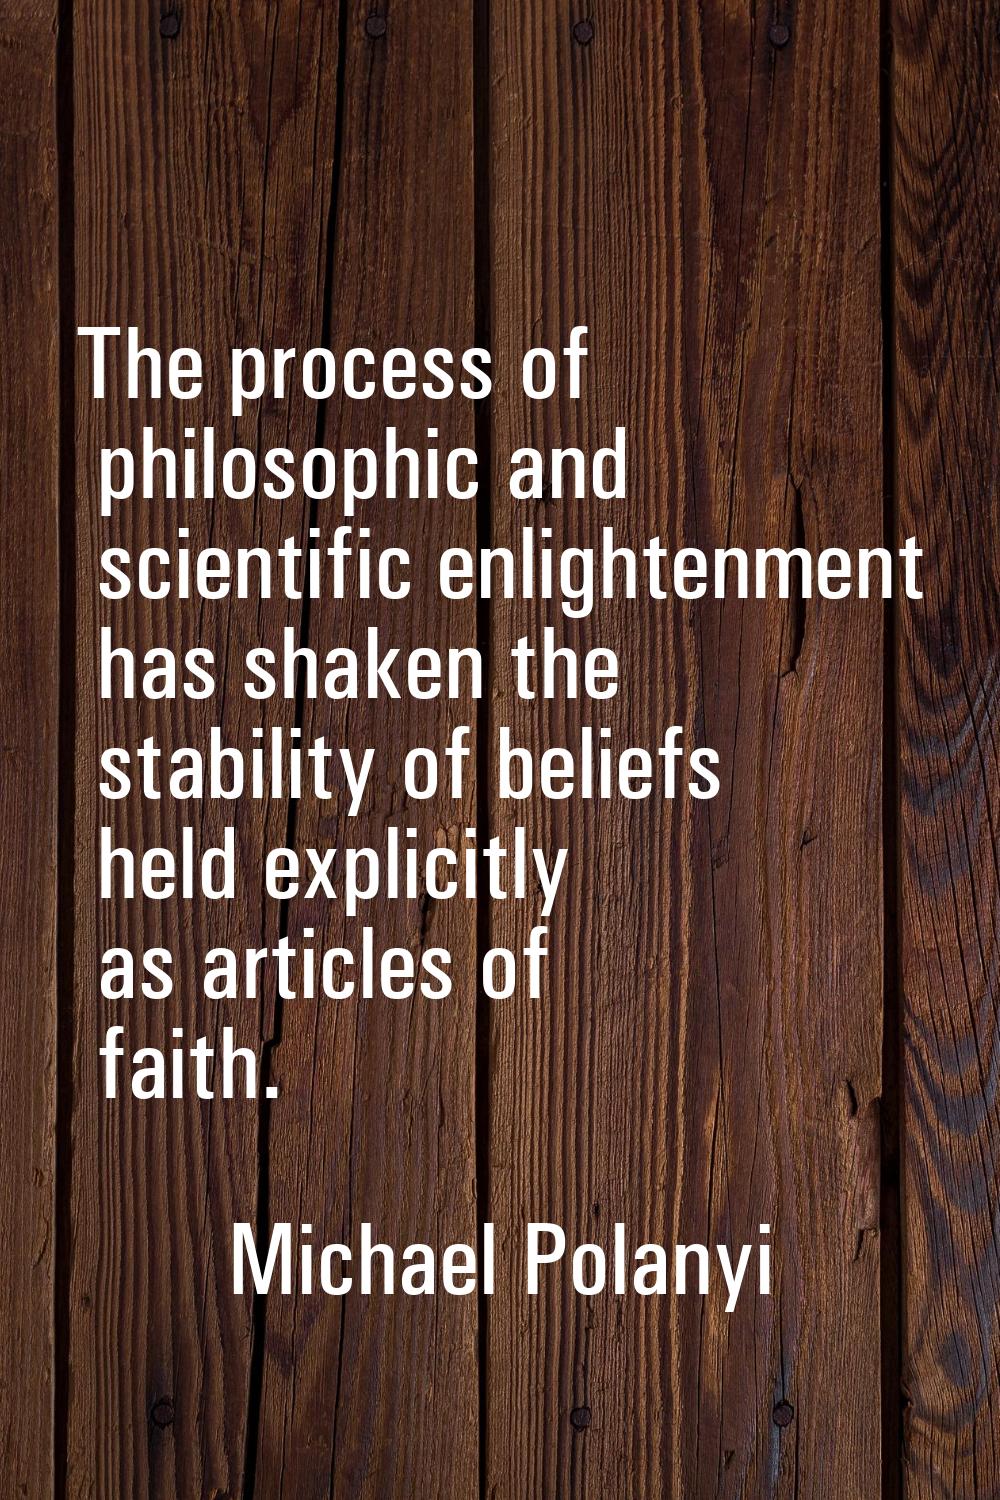 The process of philosophic and scientific enlightenment has shaken the stability of beliefs held ex